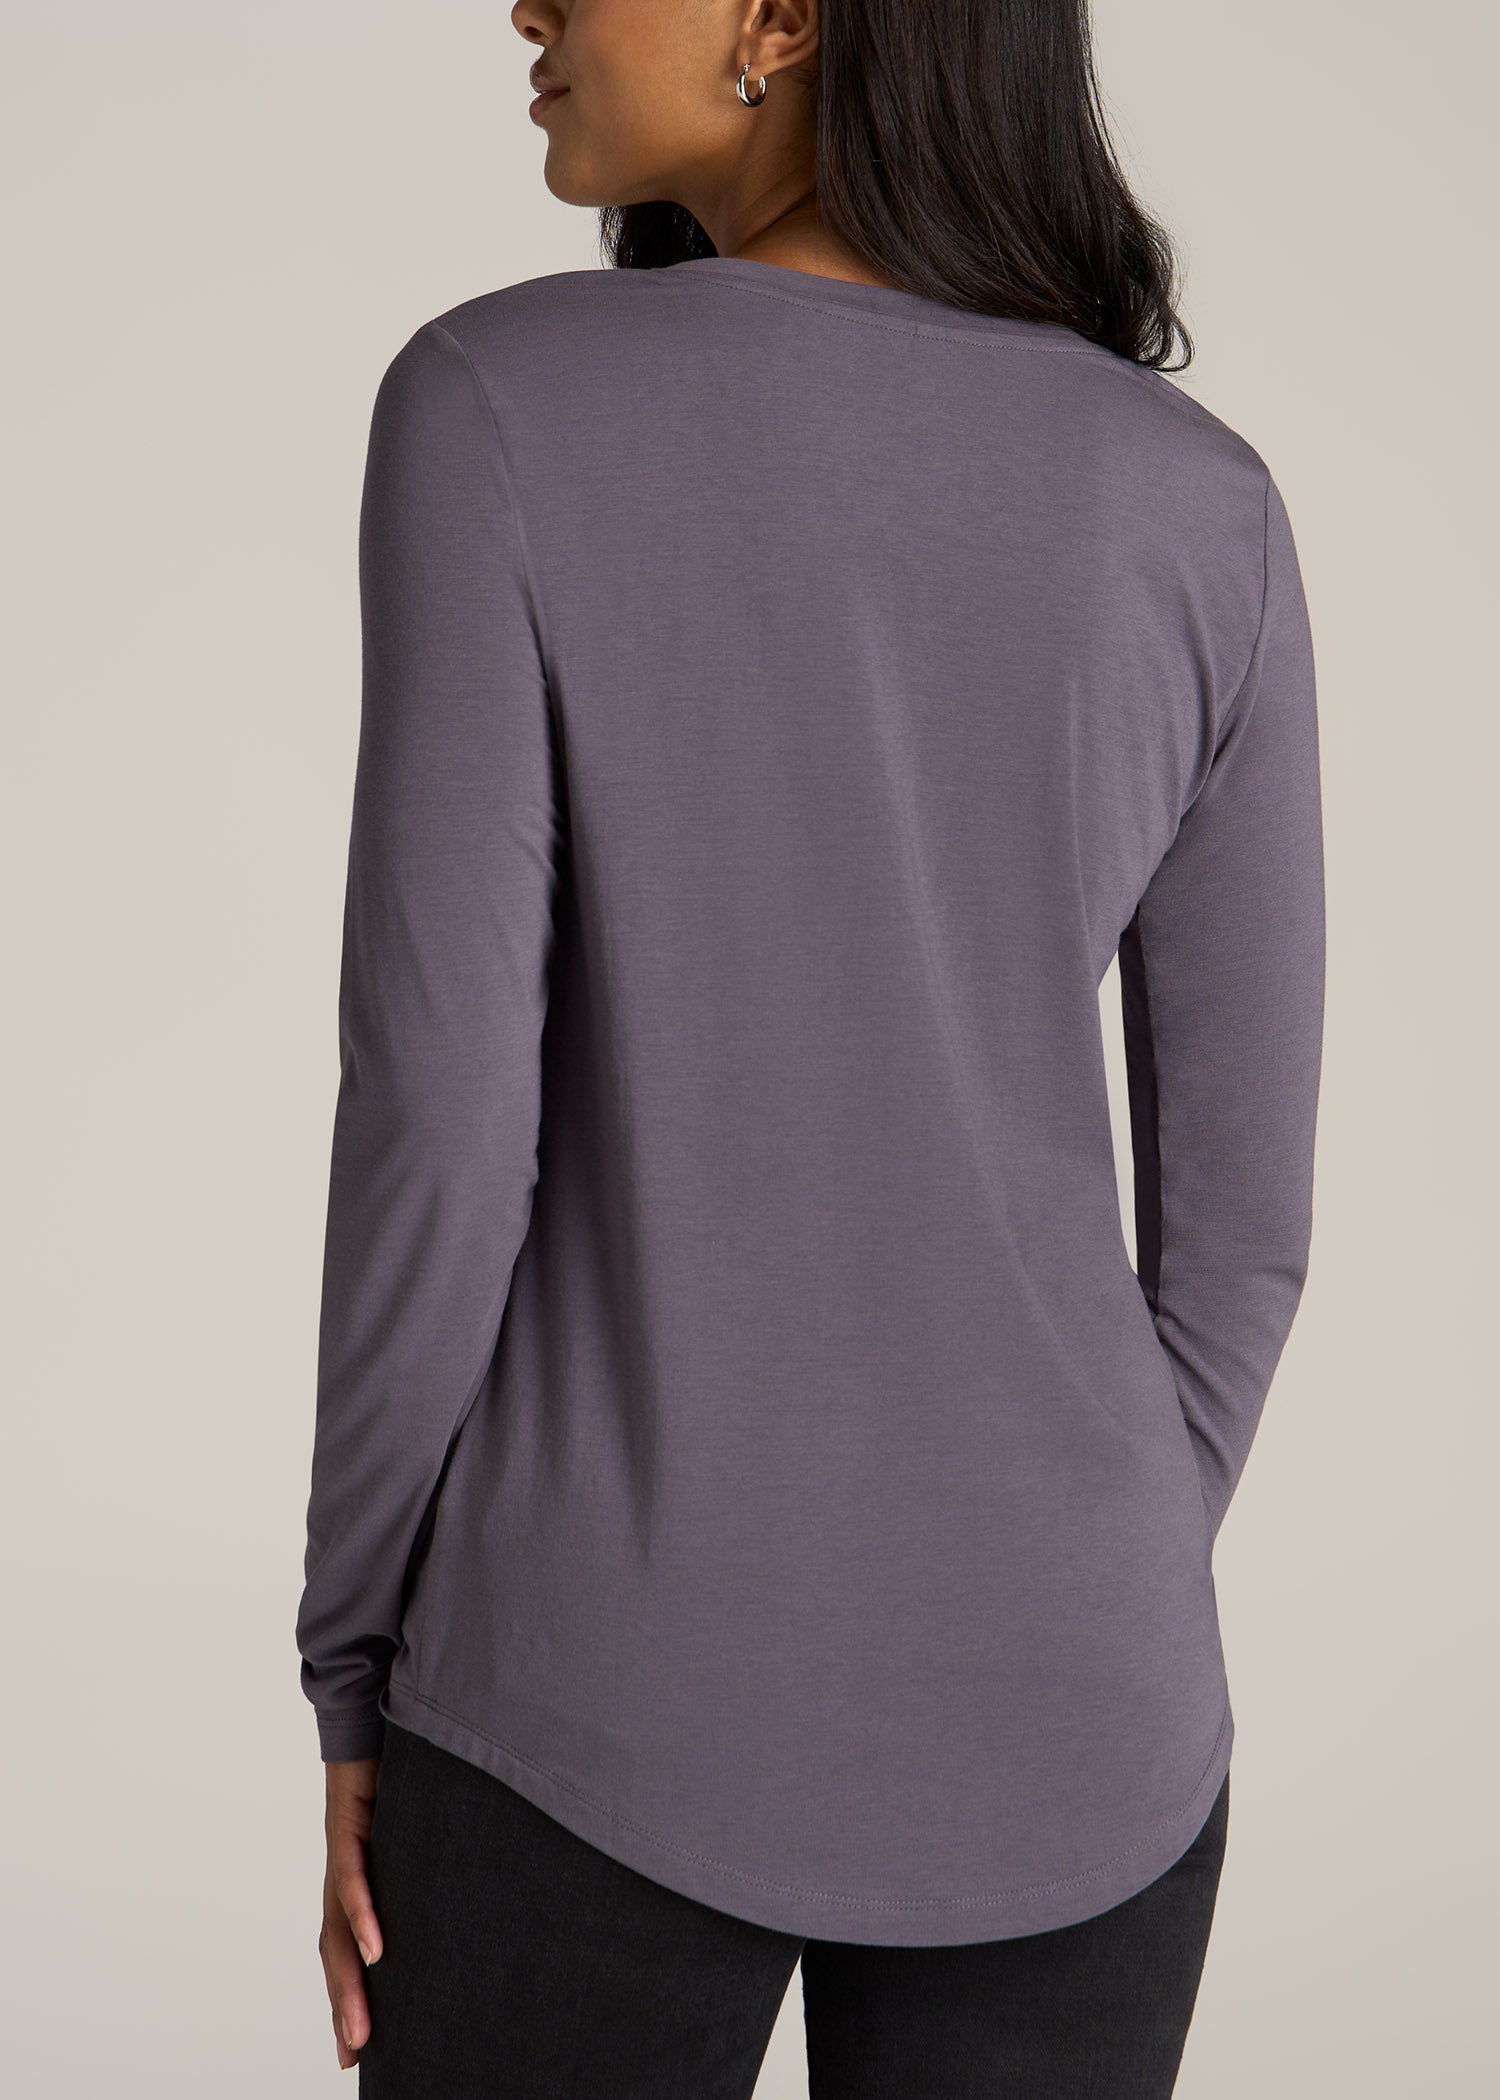 Long Sleeve V-neck Tee Shirt (Small, Charcoal) at  Women's Clothing  store: Tank Top And Cami Shirts